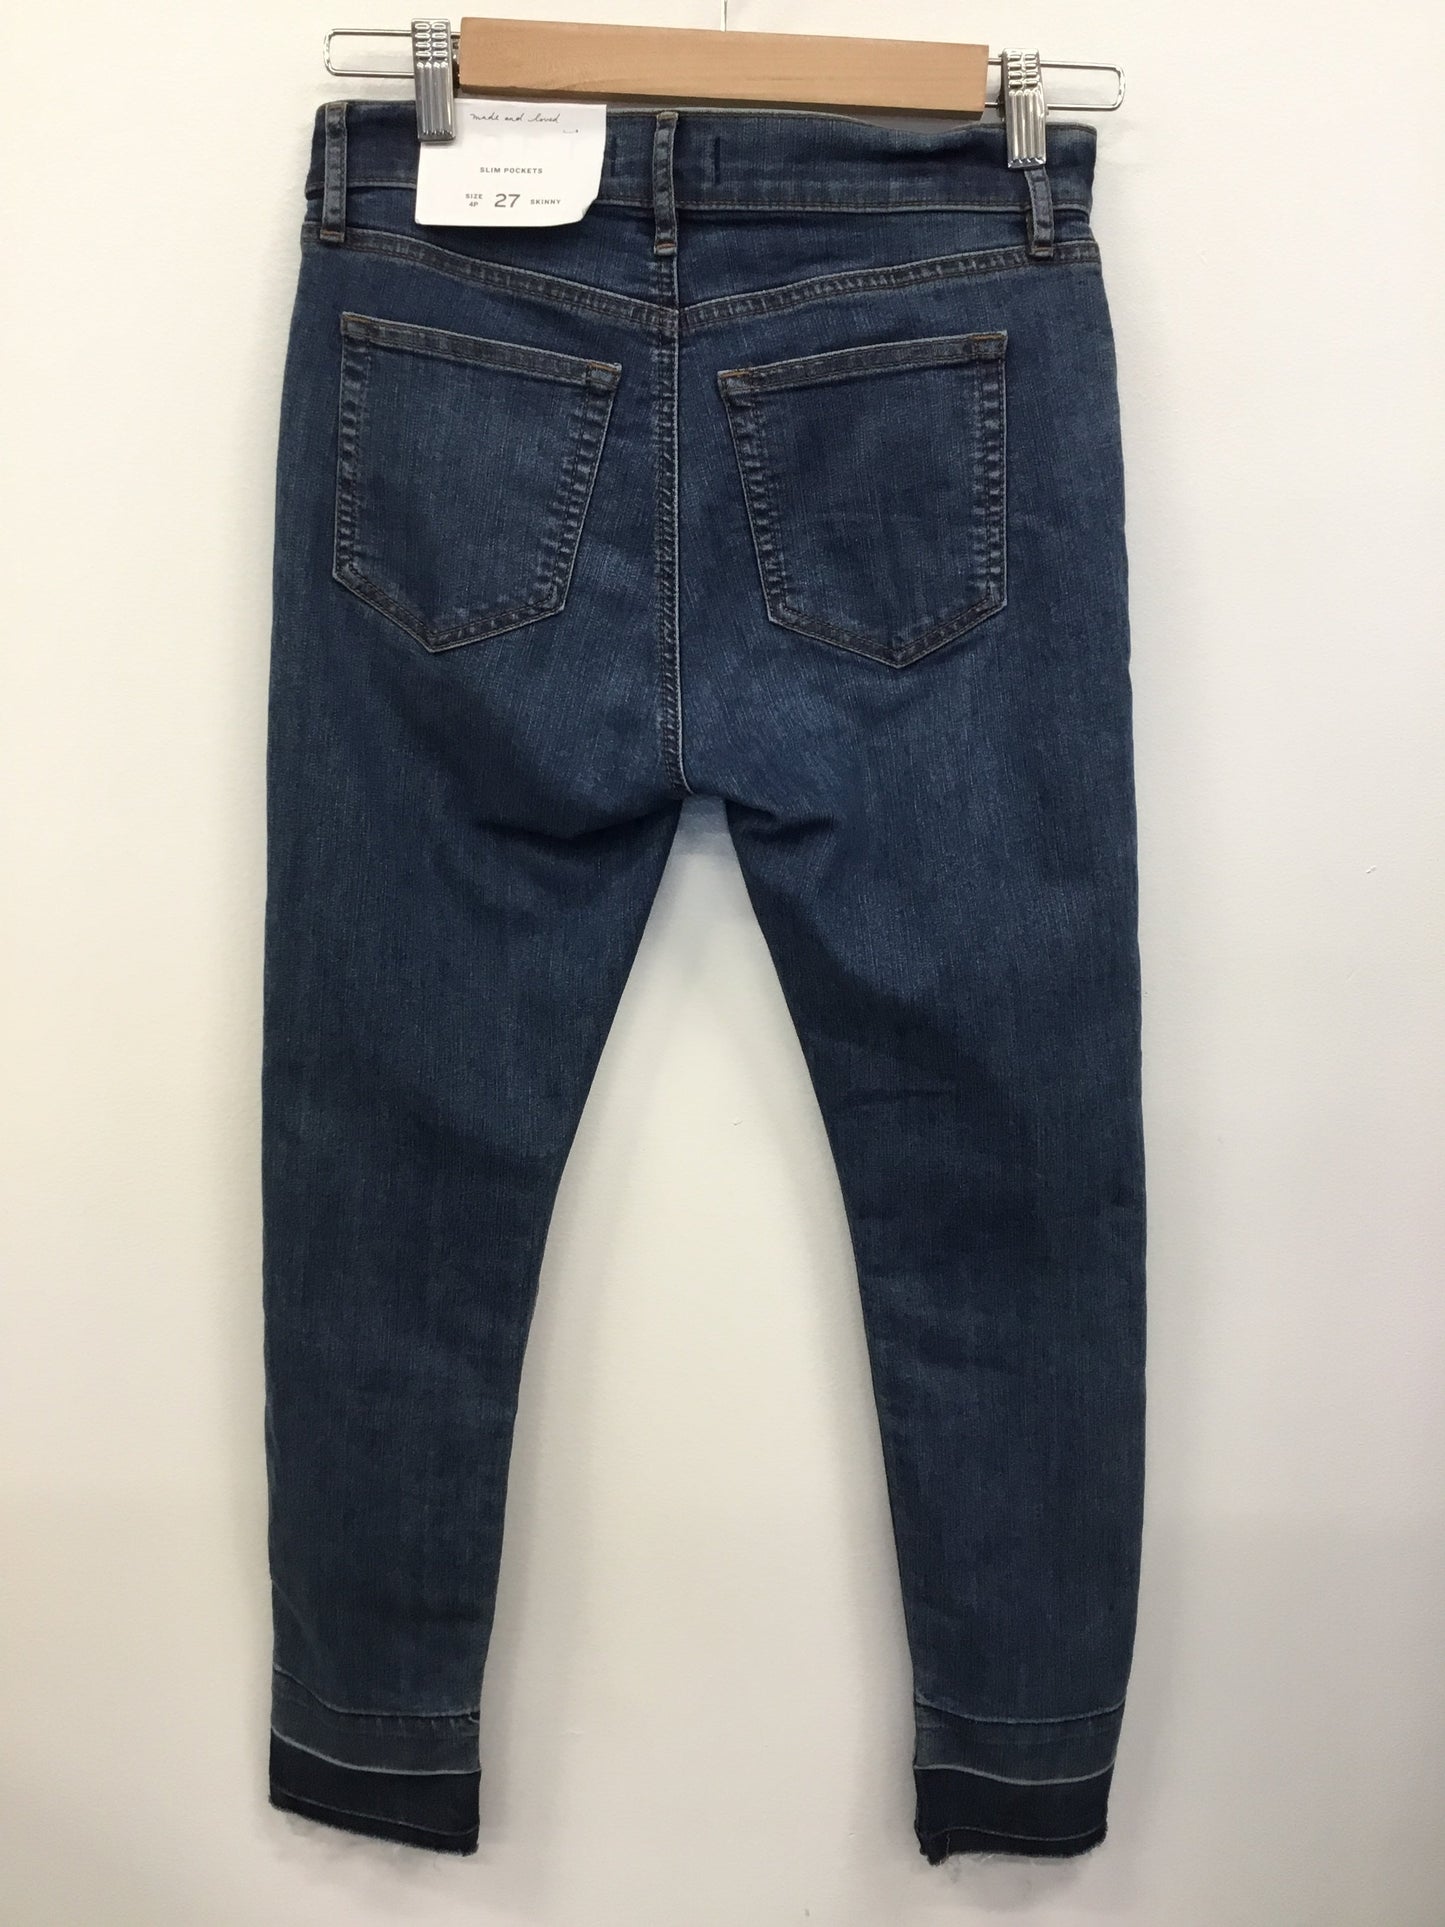 Jeans By Ann Taylor Loft  Size: 4P